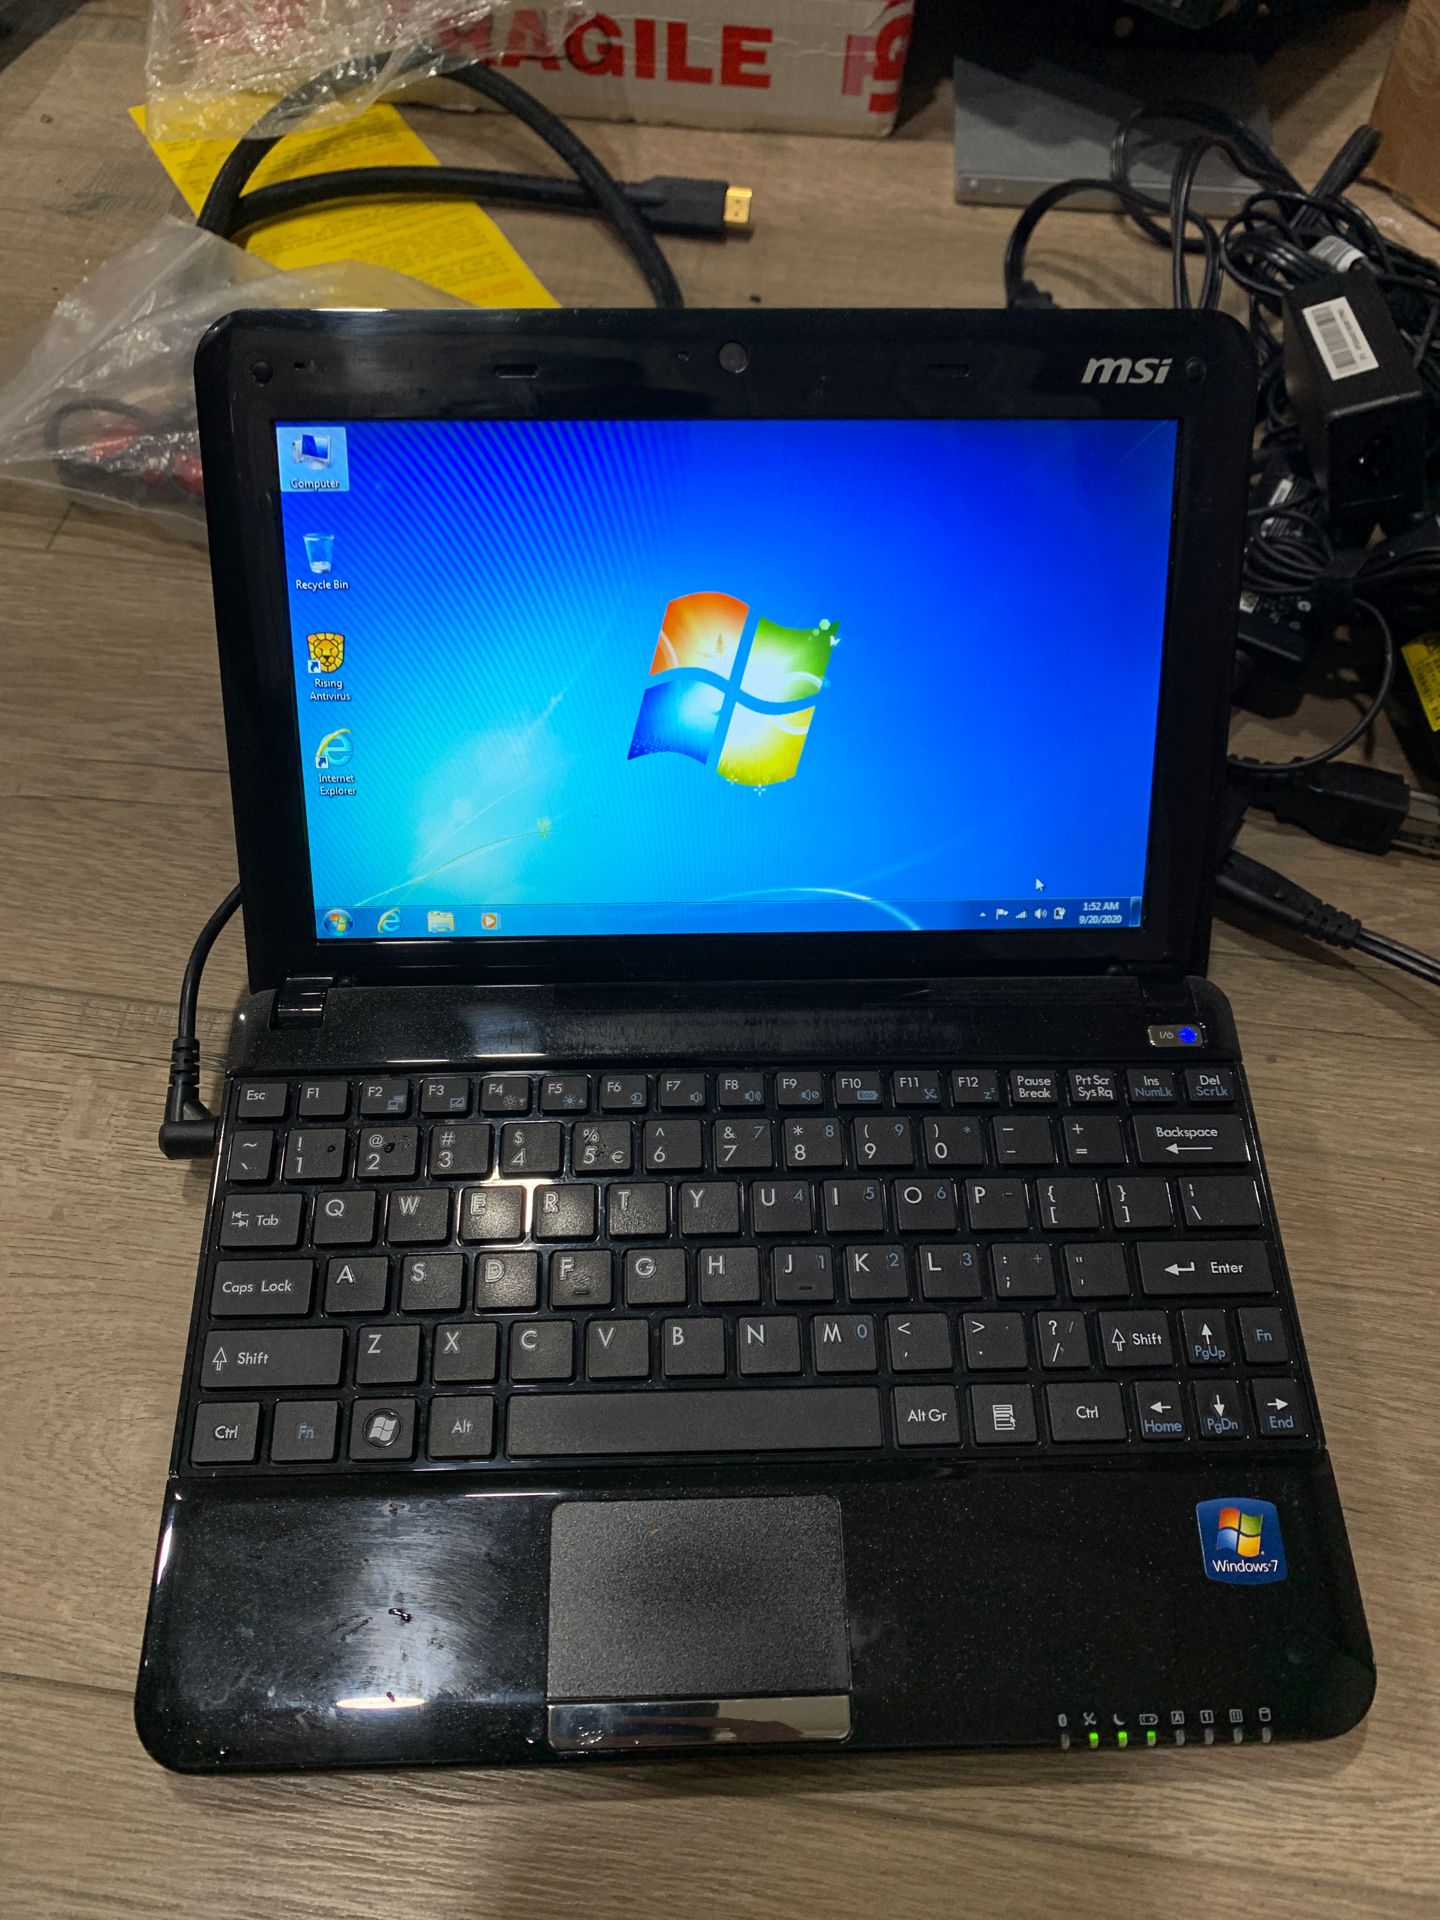 MSI 10” Notebook laptop computer Webcam wins 7